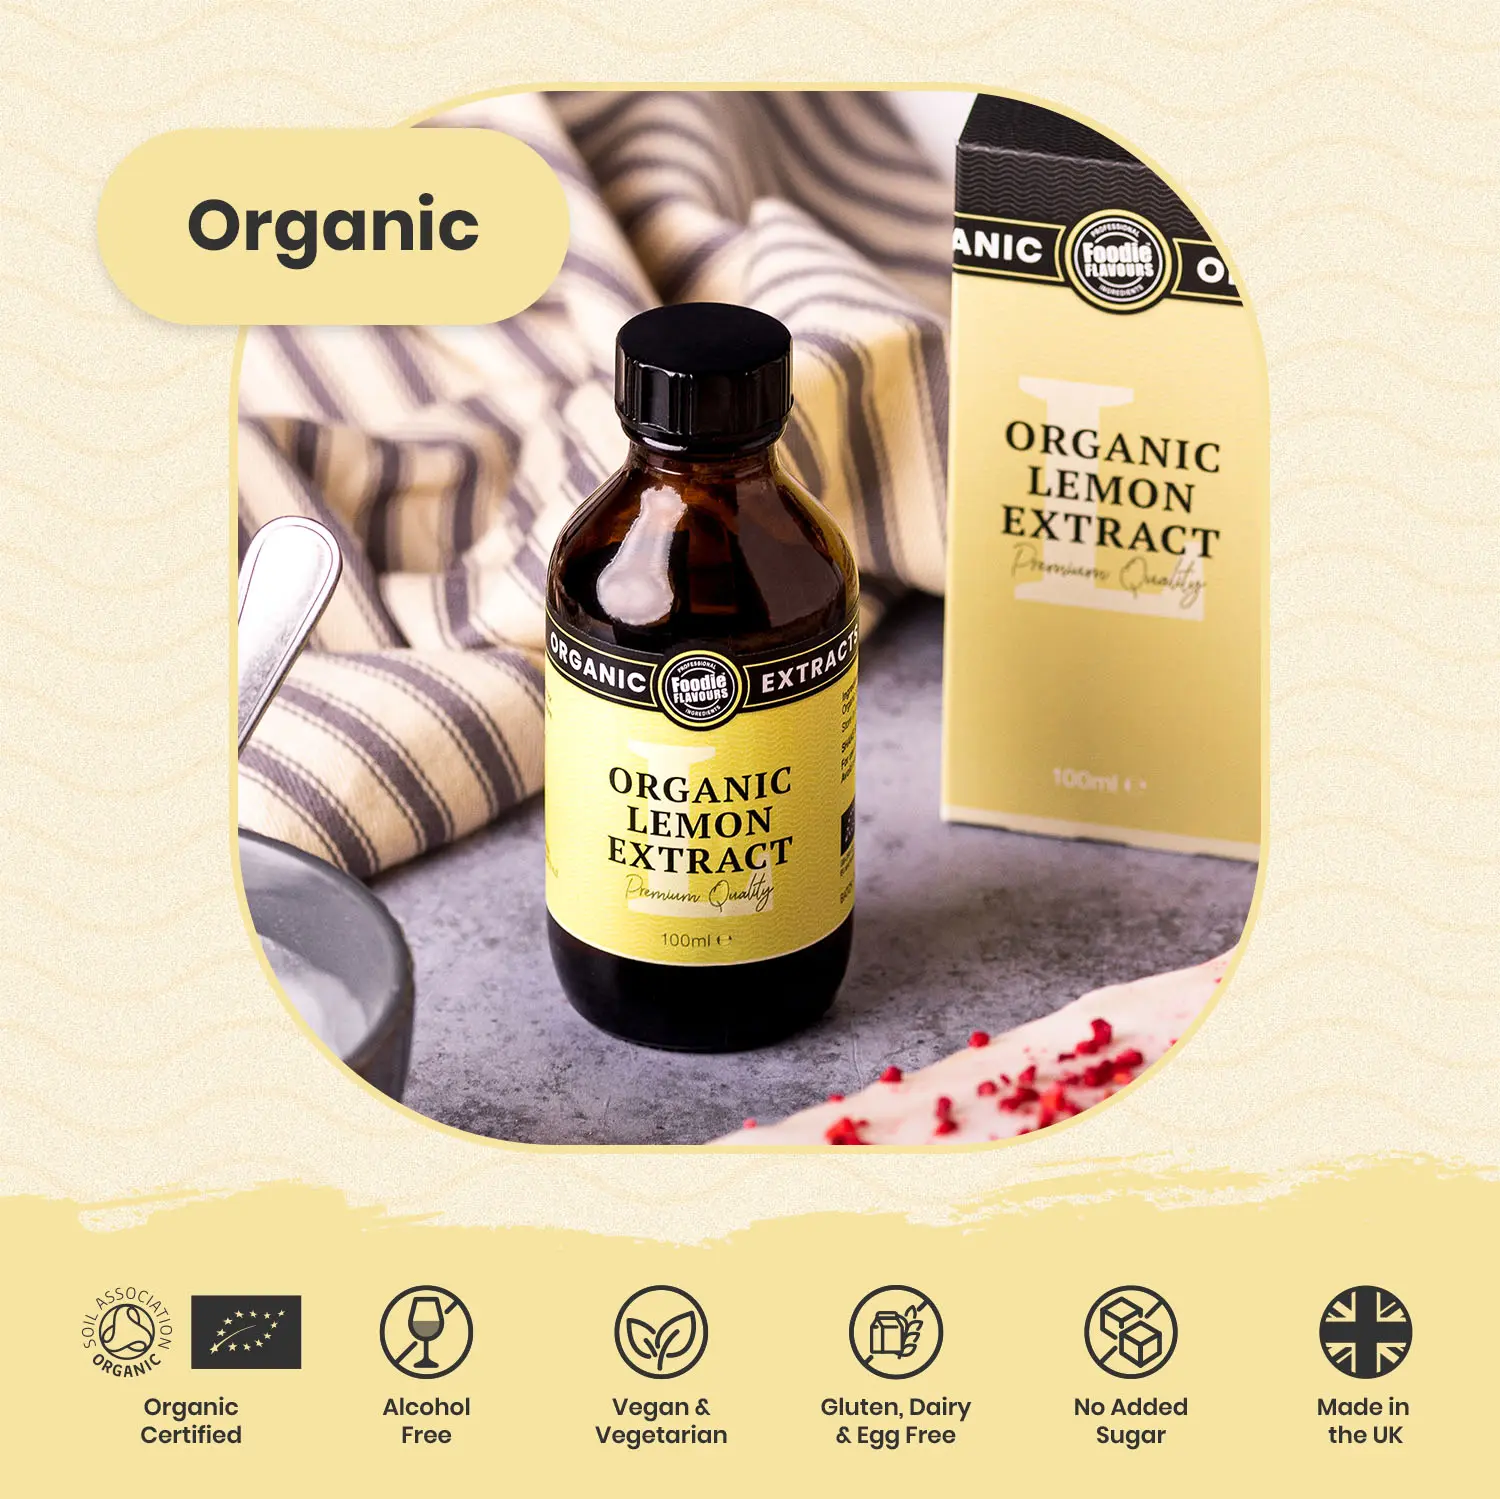 Organic Lemon Extract - Features